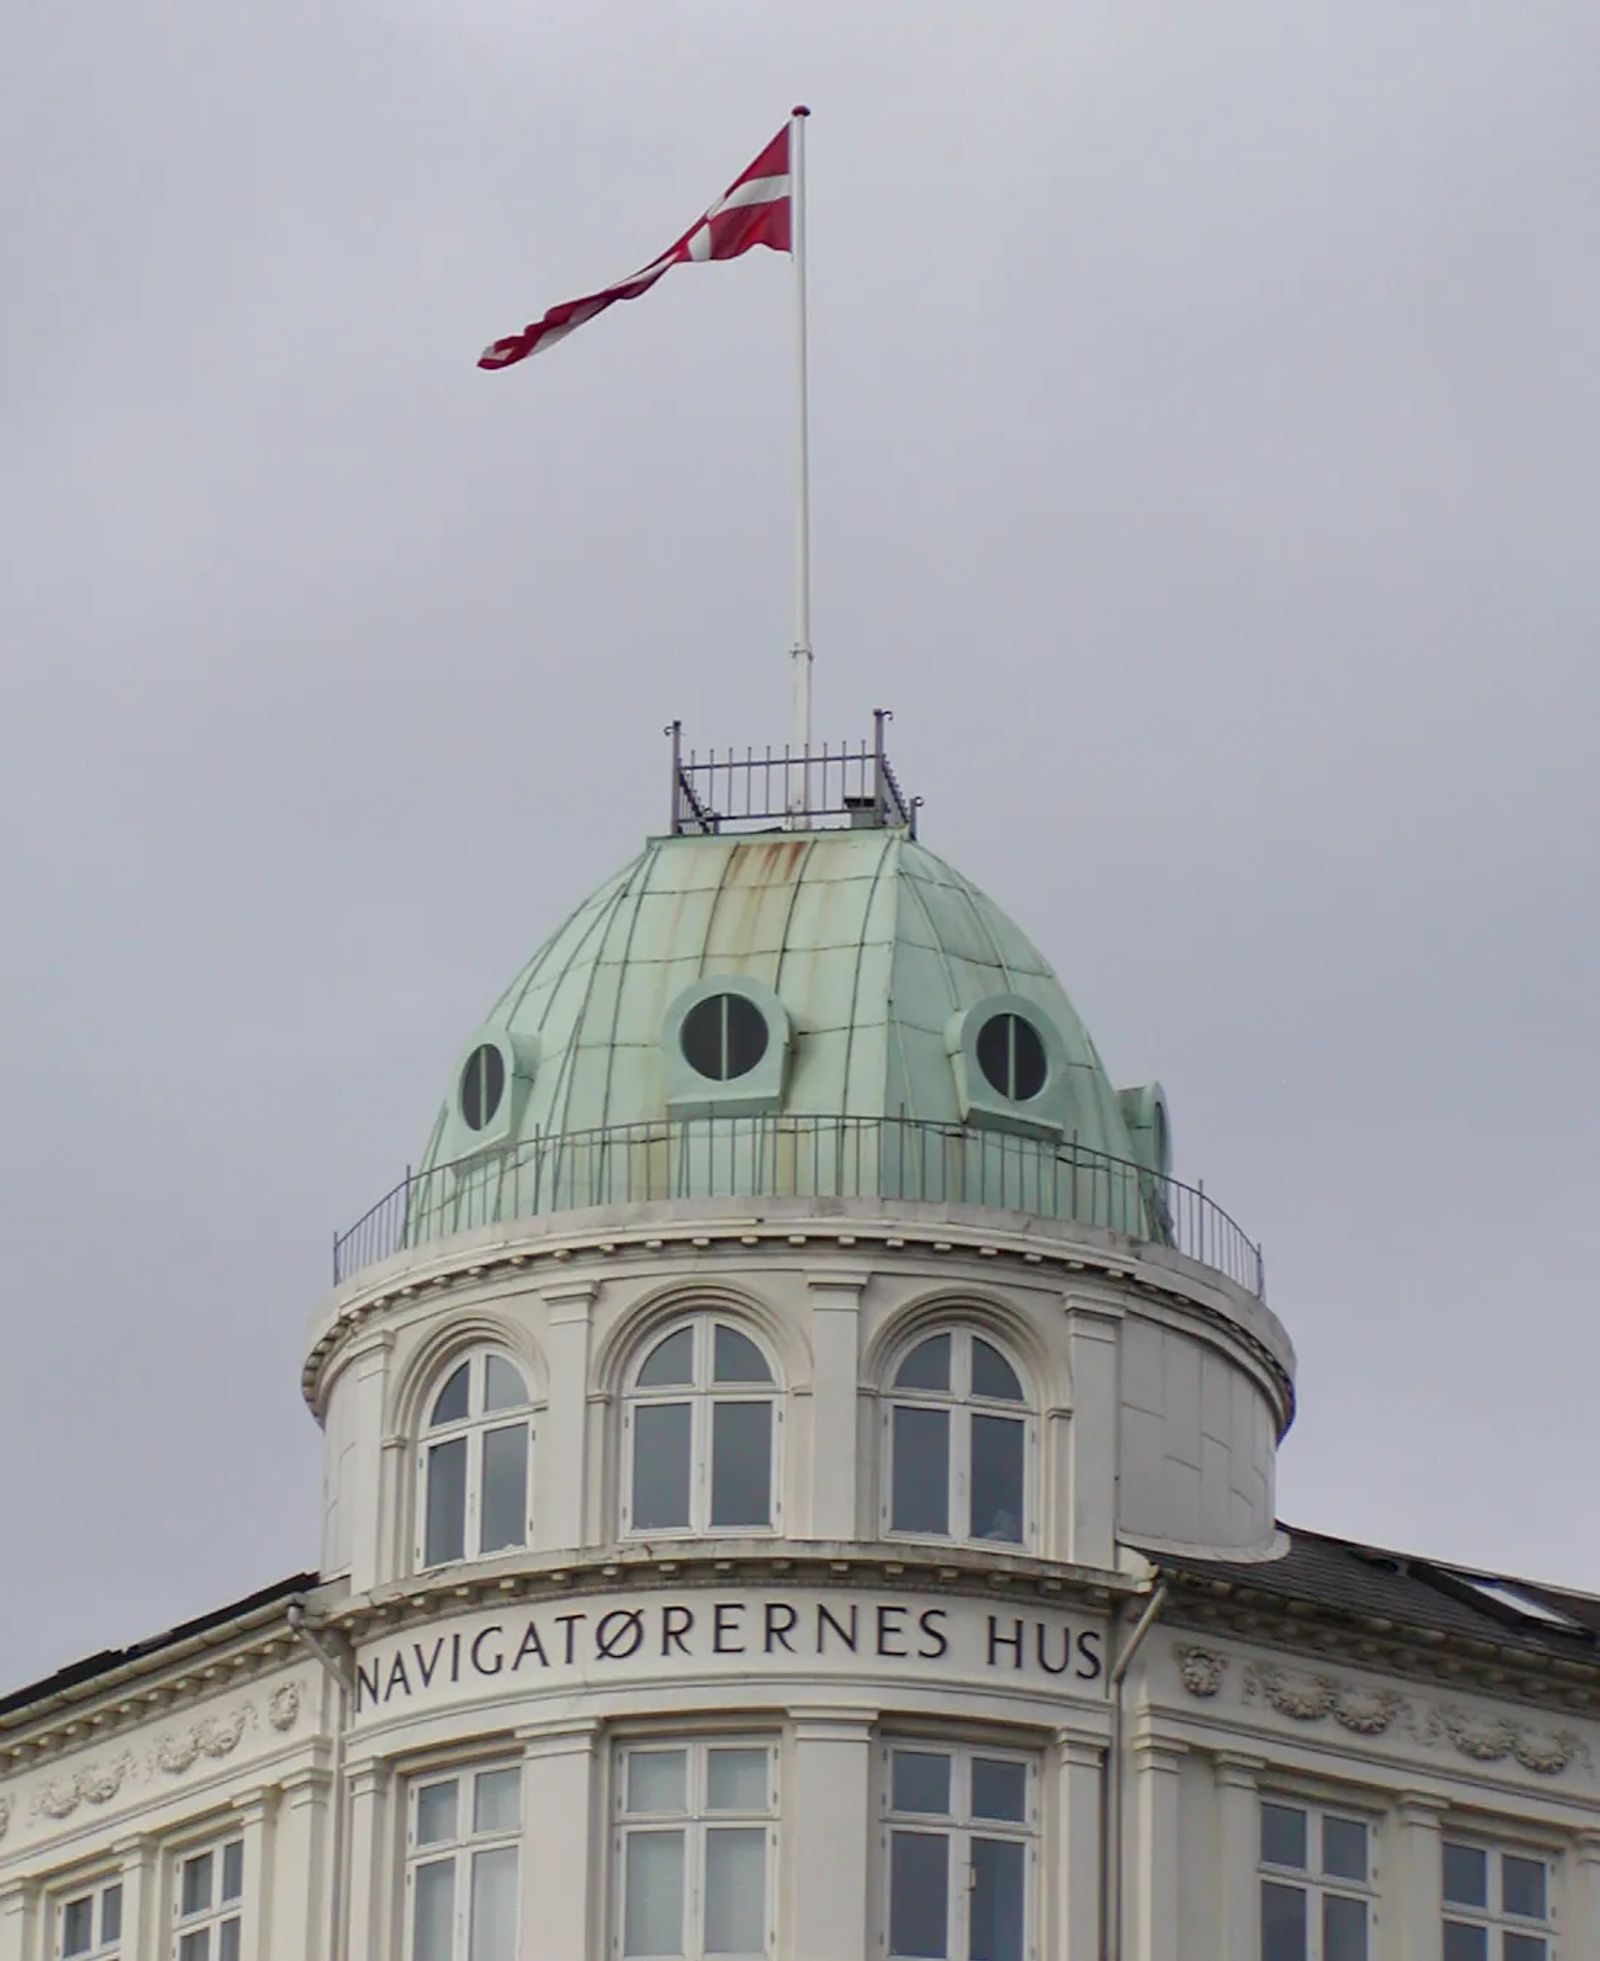 Photo of the dome of the Navigatorernes Hus (the Navigator's House) in Nyhavn, Copenhagen, Denmark